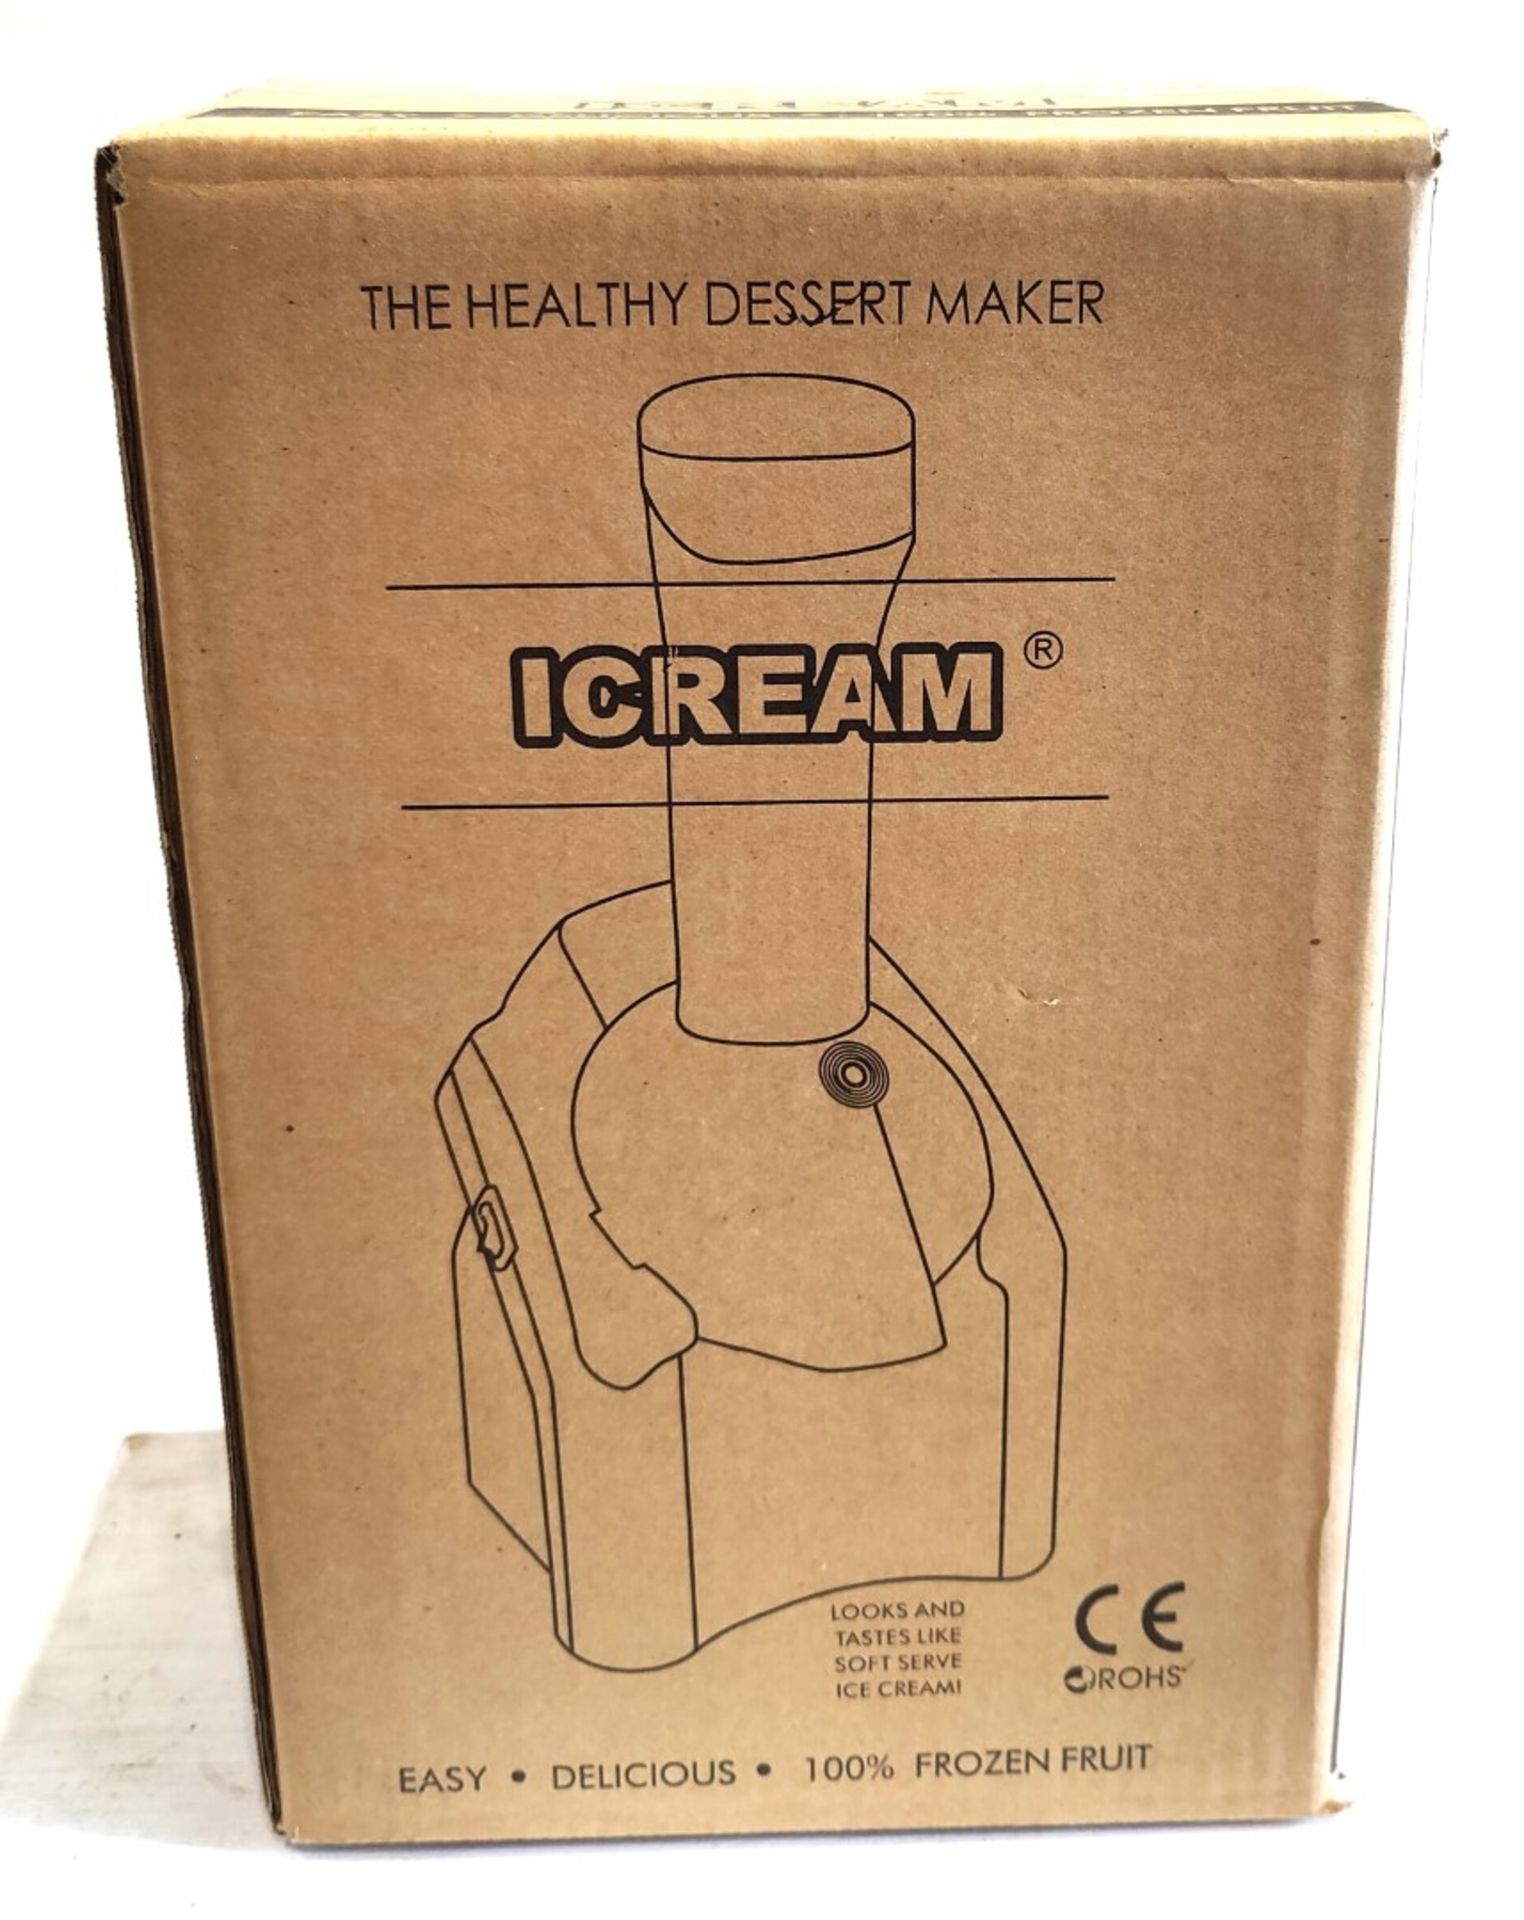 1 x Icream Healthy Desert Maker - Yogurt and Soft Ice Cream Home Appliance - 240v - Brand New! - Image 4 of 12